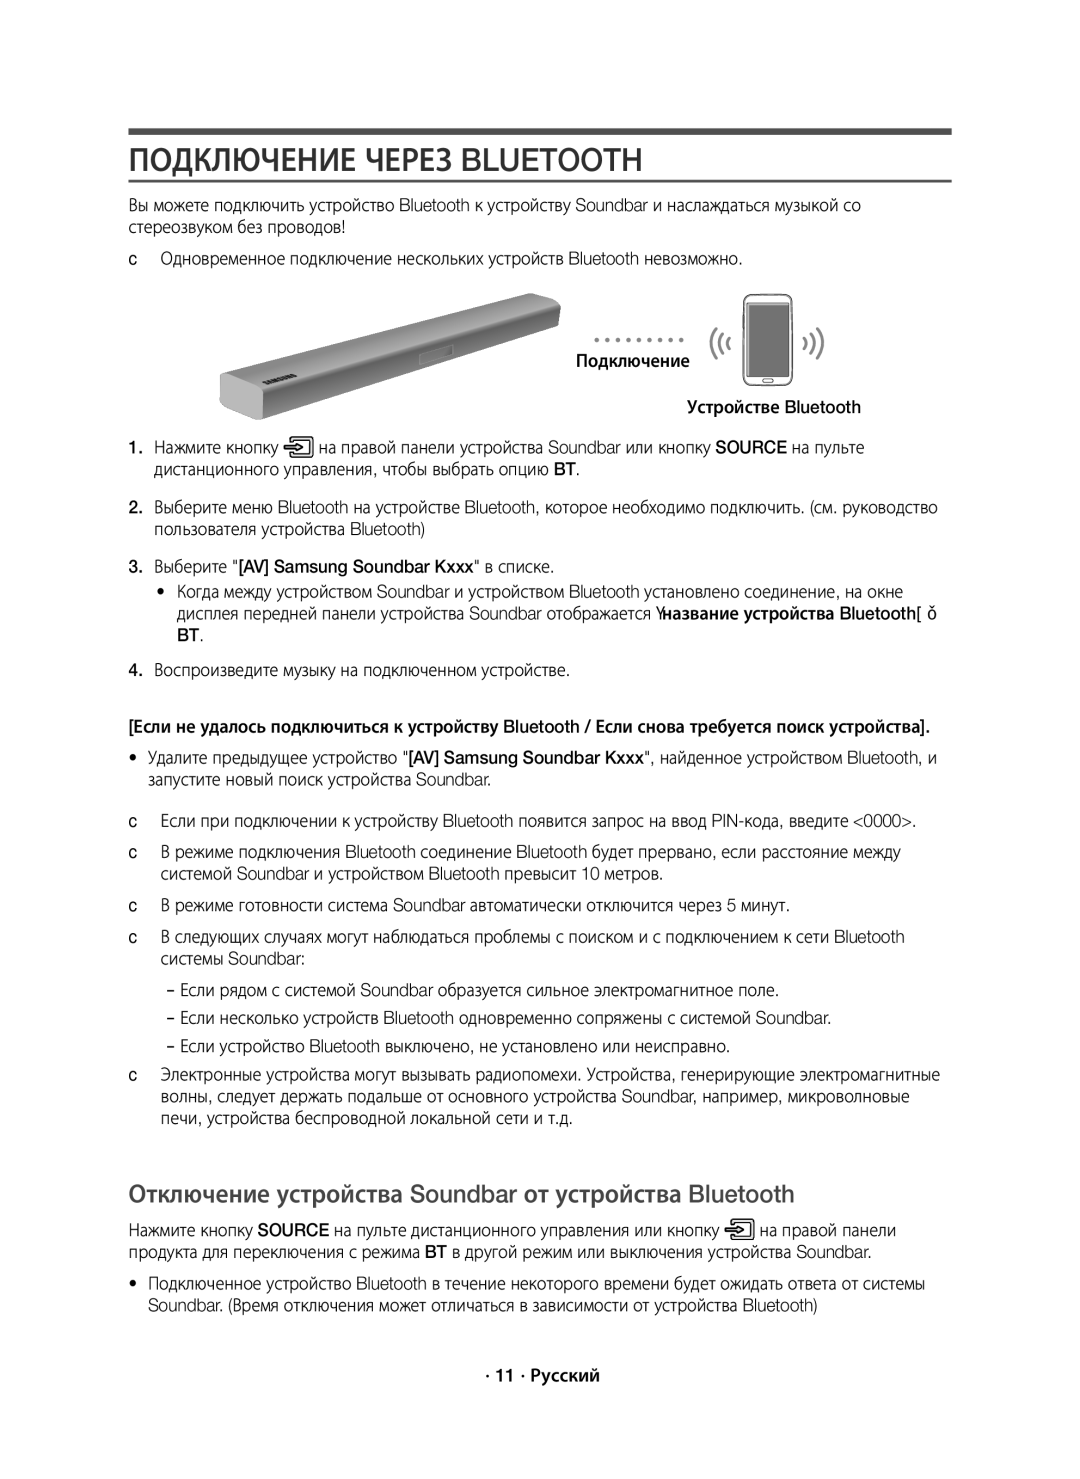 Samsung HW-K650/RU Подключение Через Bluetooth, Отключение устройства Soundbar от устройства Bluetooth, · 11 · Русский 